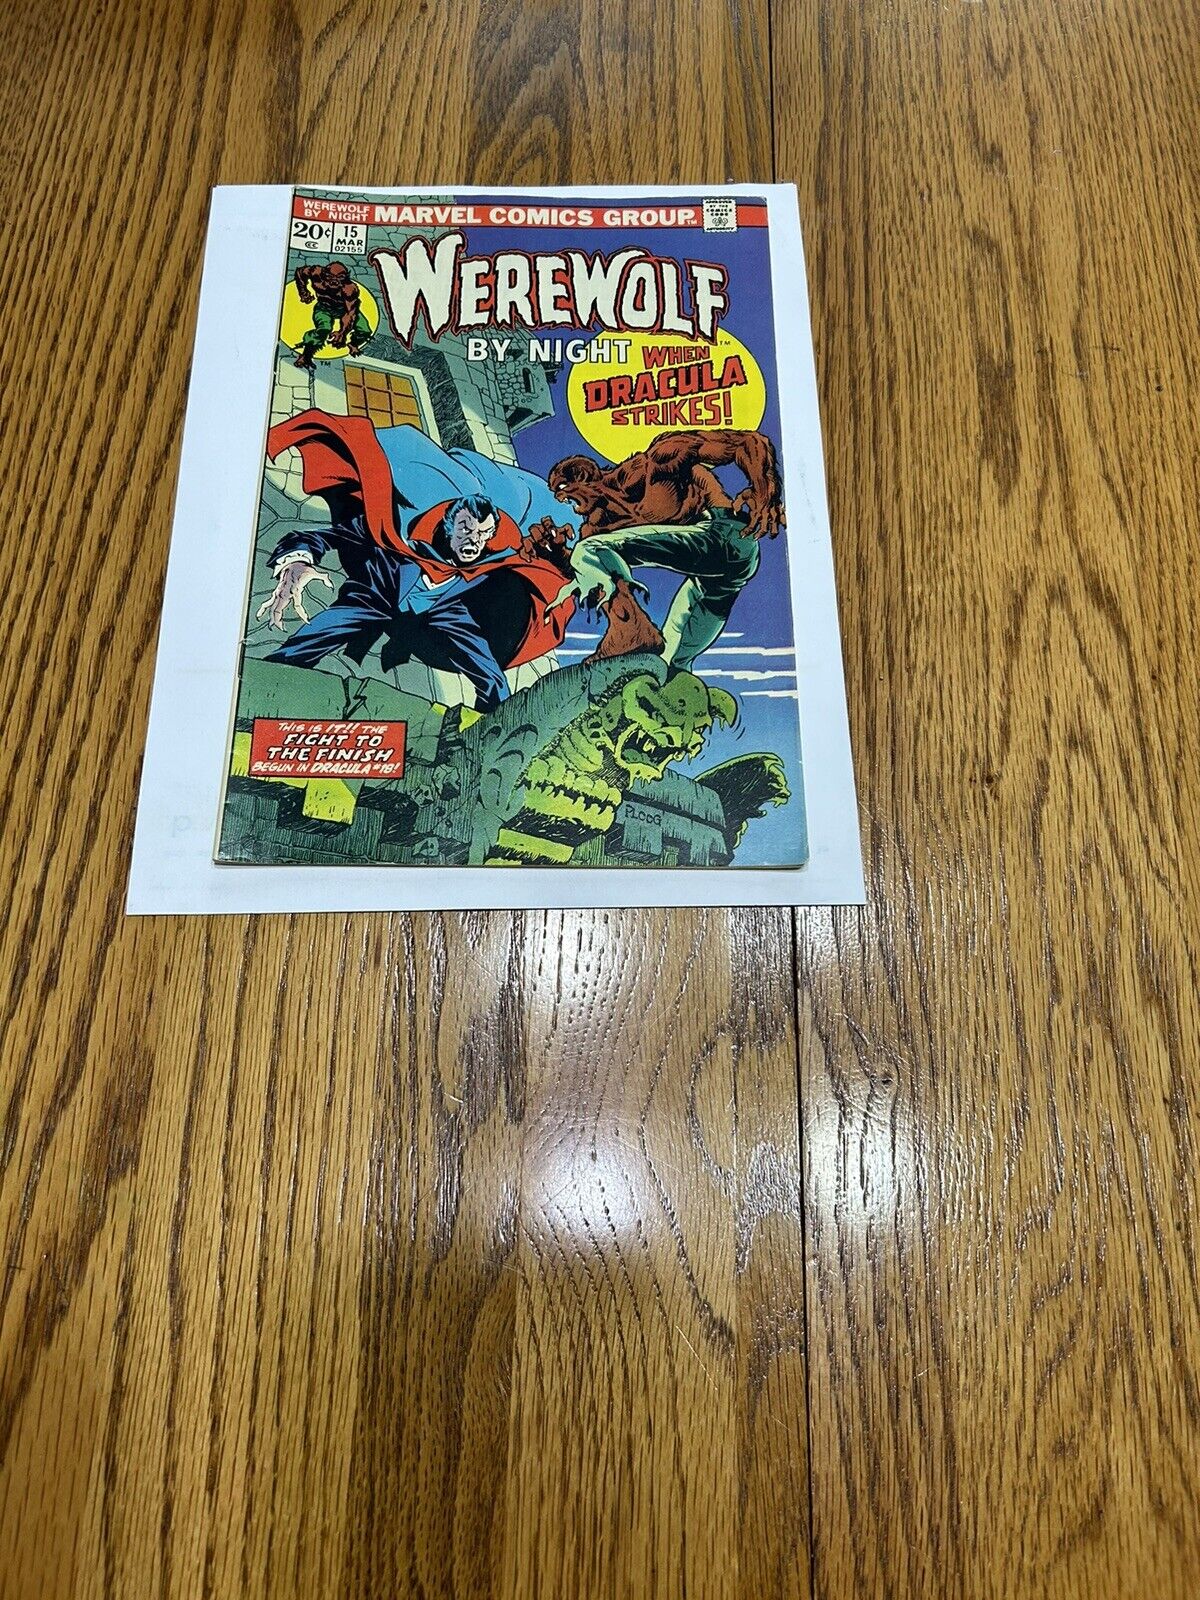 Vintage * Werewolf by Night When Dracula Strikes #15 Marvel Comics Group 1974 